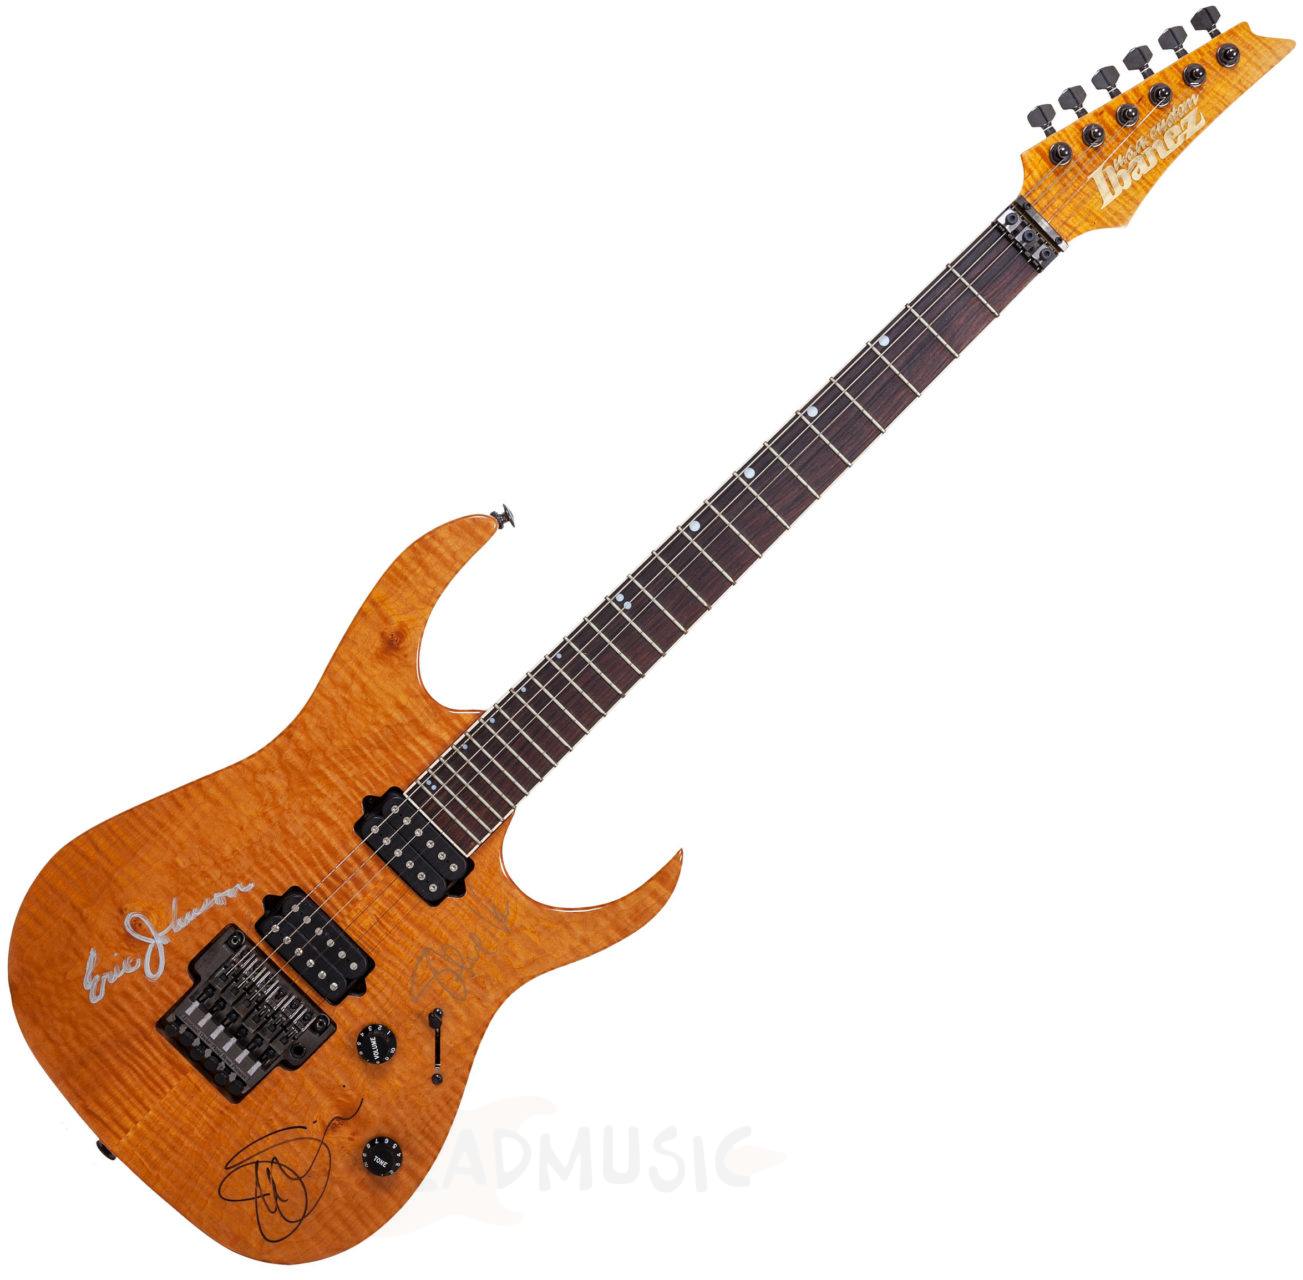 1995 Ibanez USA Custom USRG-30 Signed by Steve Vai, Satriani and Eric Johnson